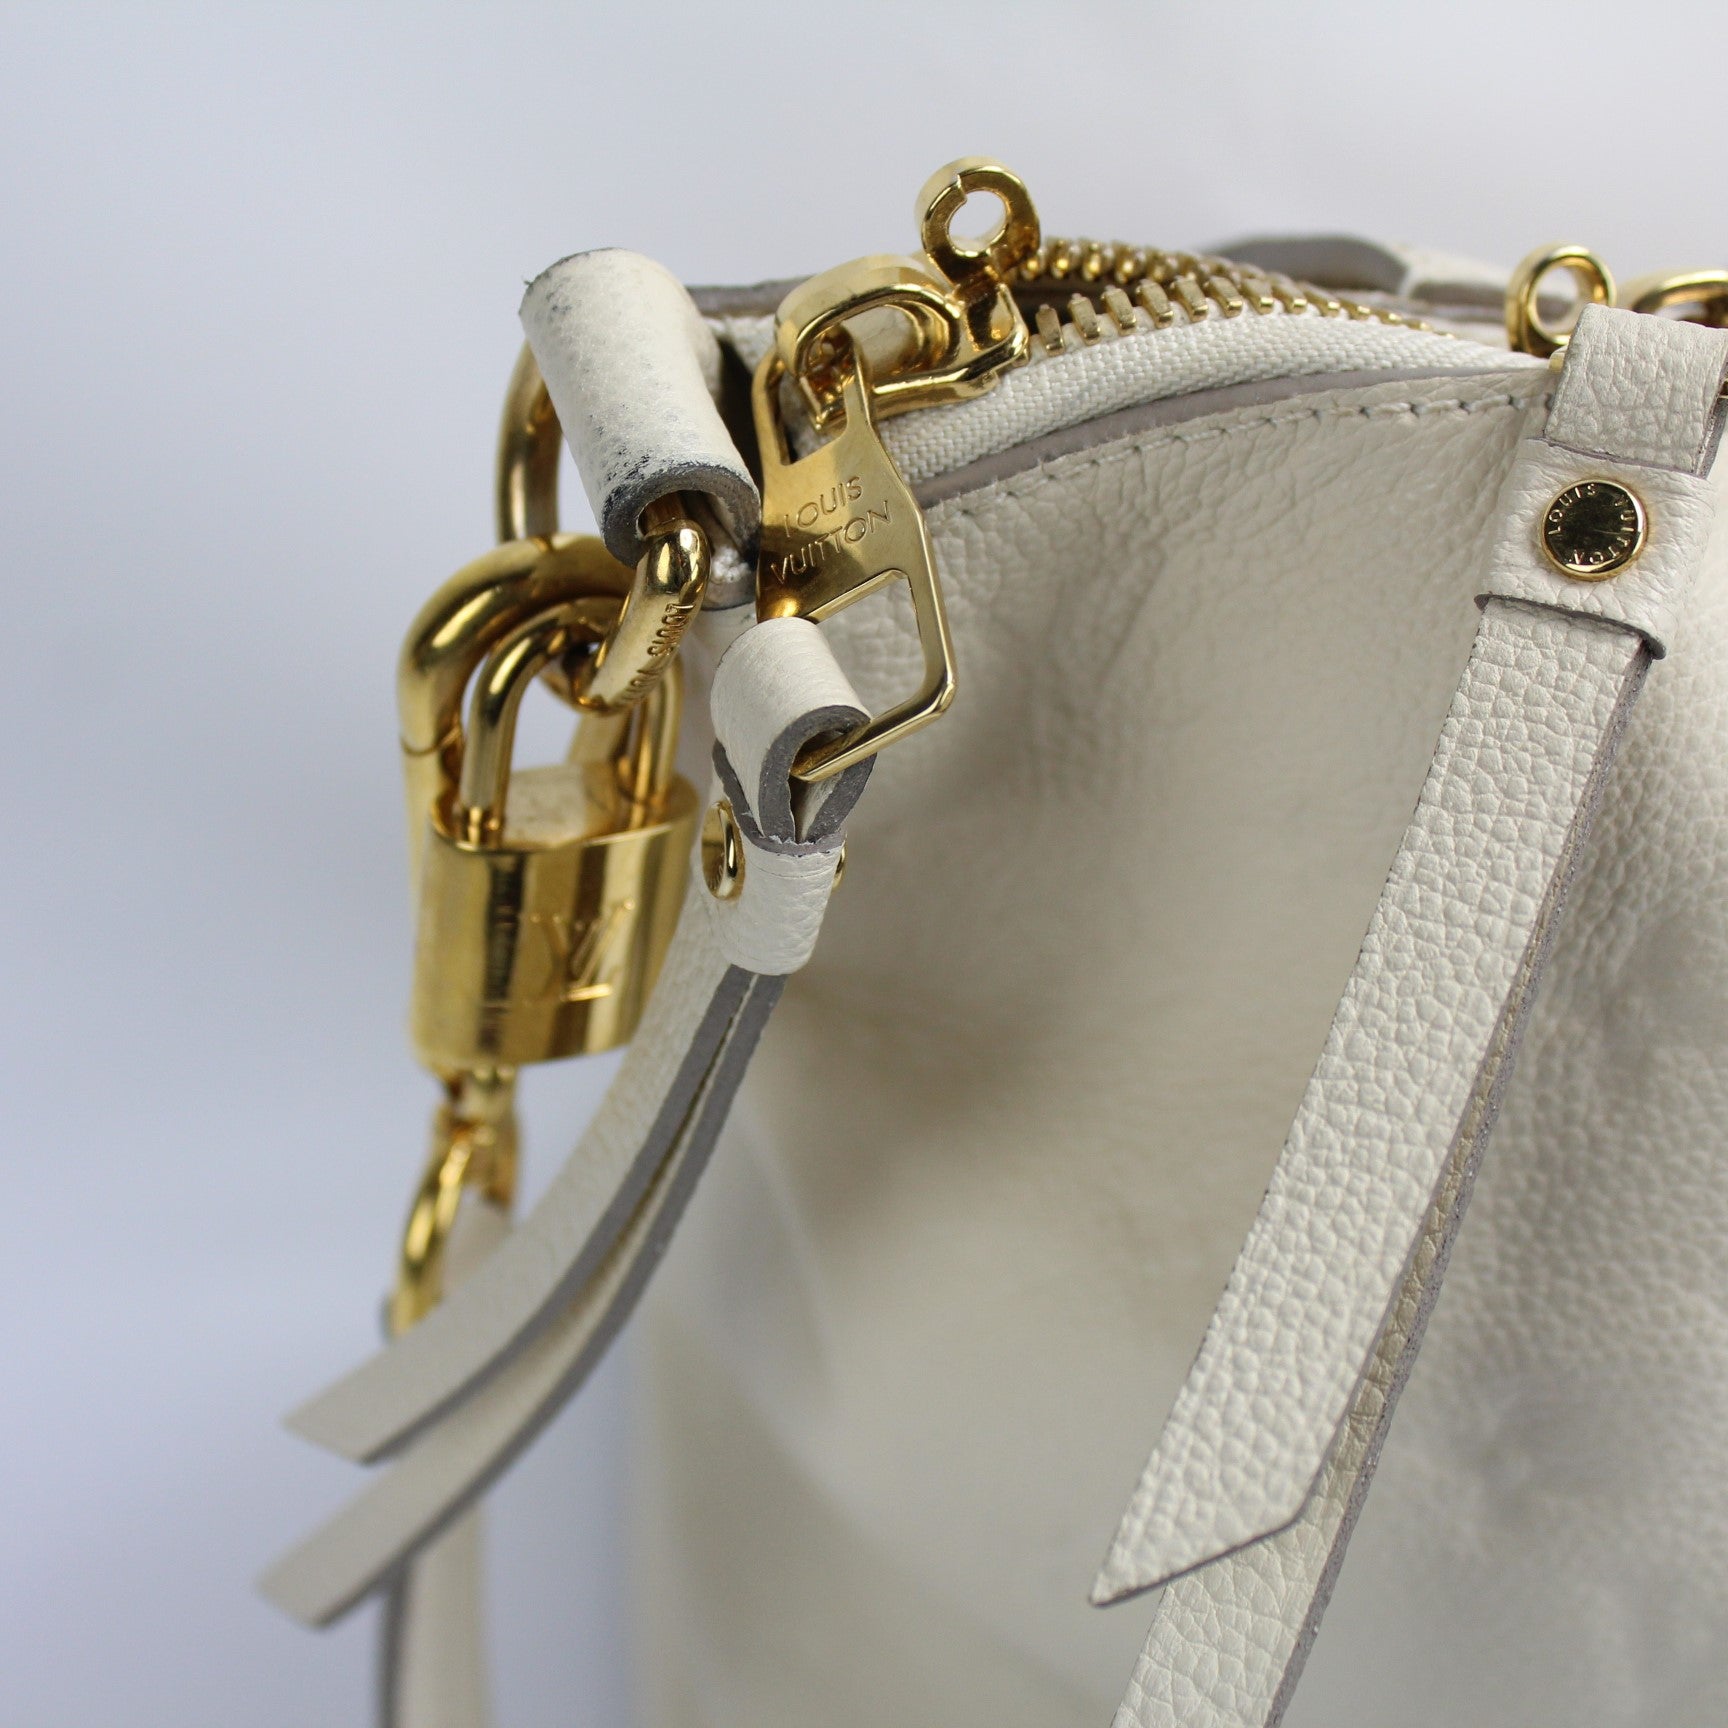 Lumineuse GM Empreinte – Keeks Designer Handbags